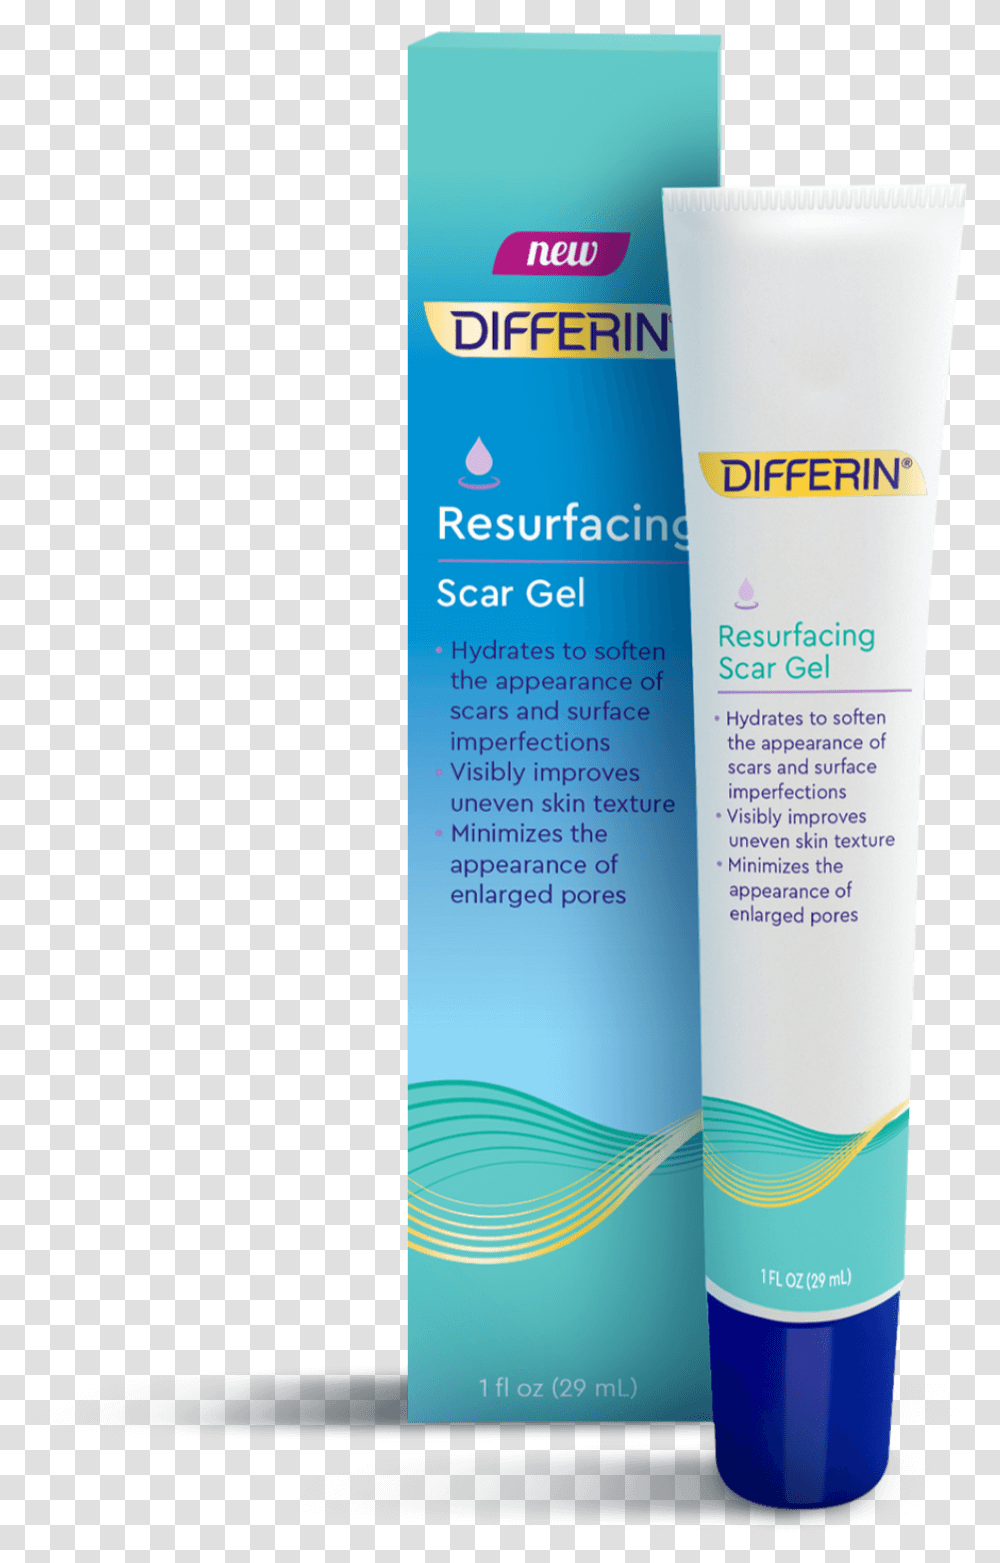 Resurfacing Scar Gel Differin Differin Resurfacing Scar Gel, Sunscreen, Cosmetics, Bottle Transparent Png